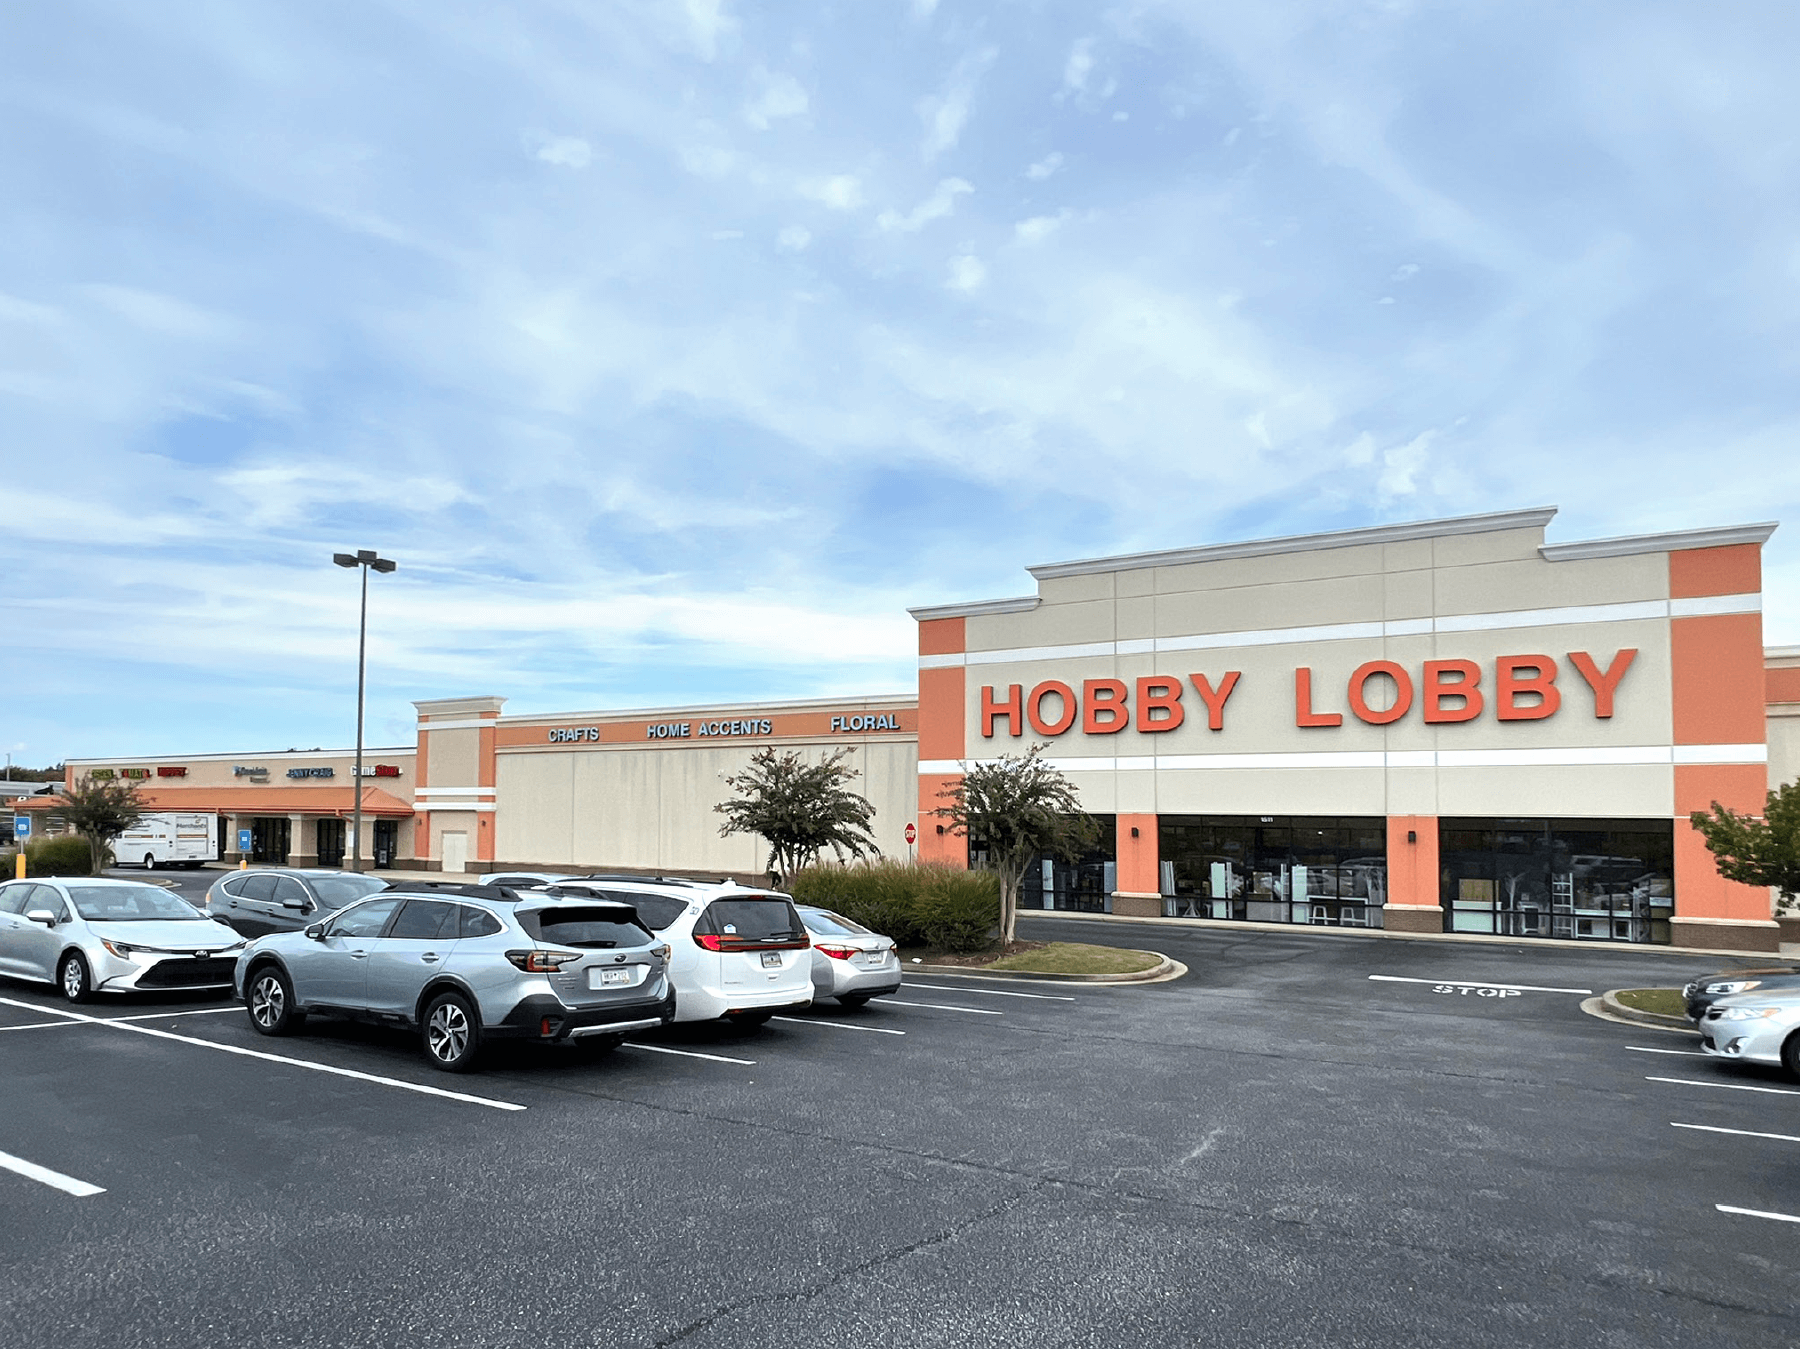 The Hobby Lobby Center